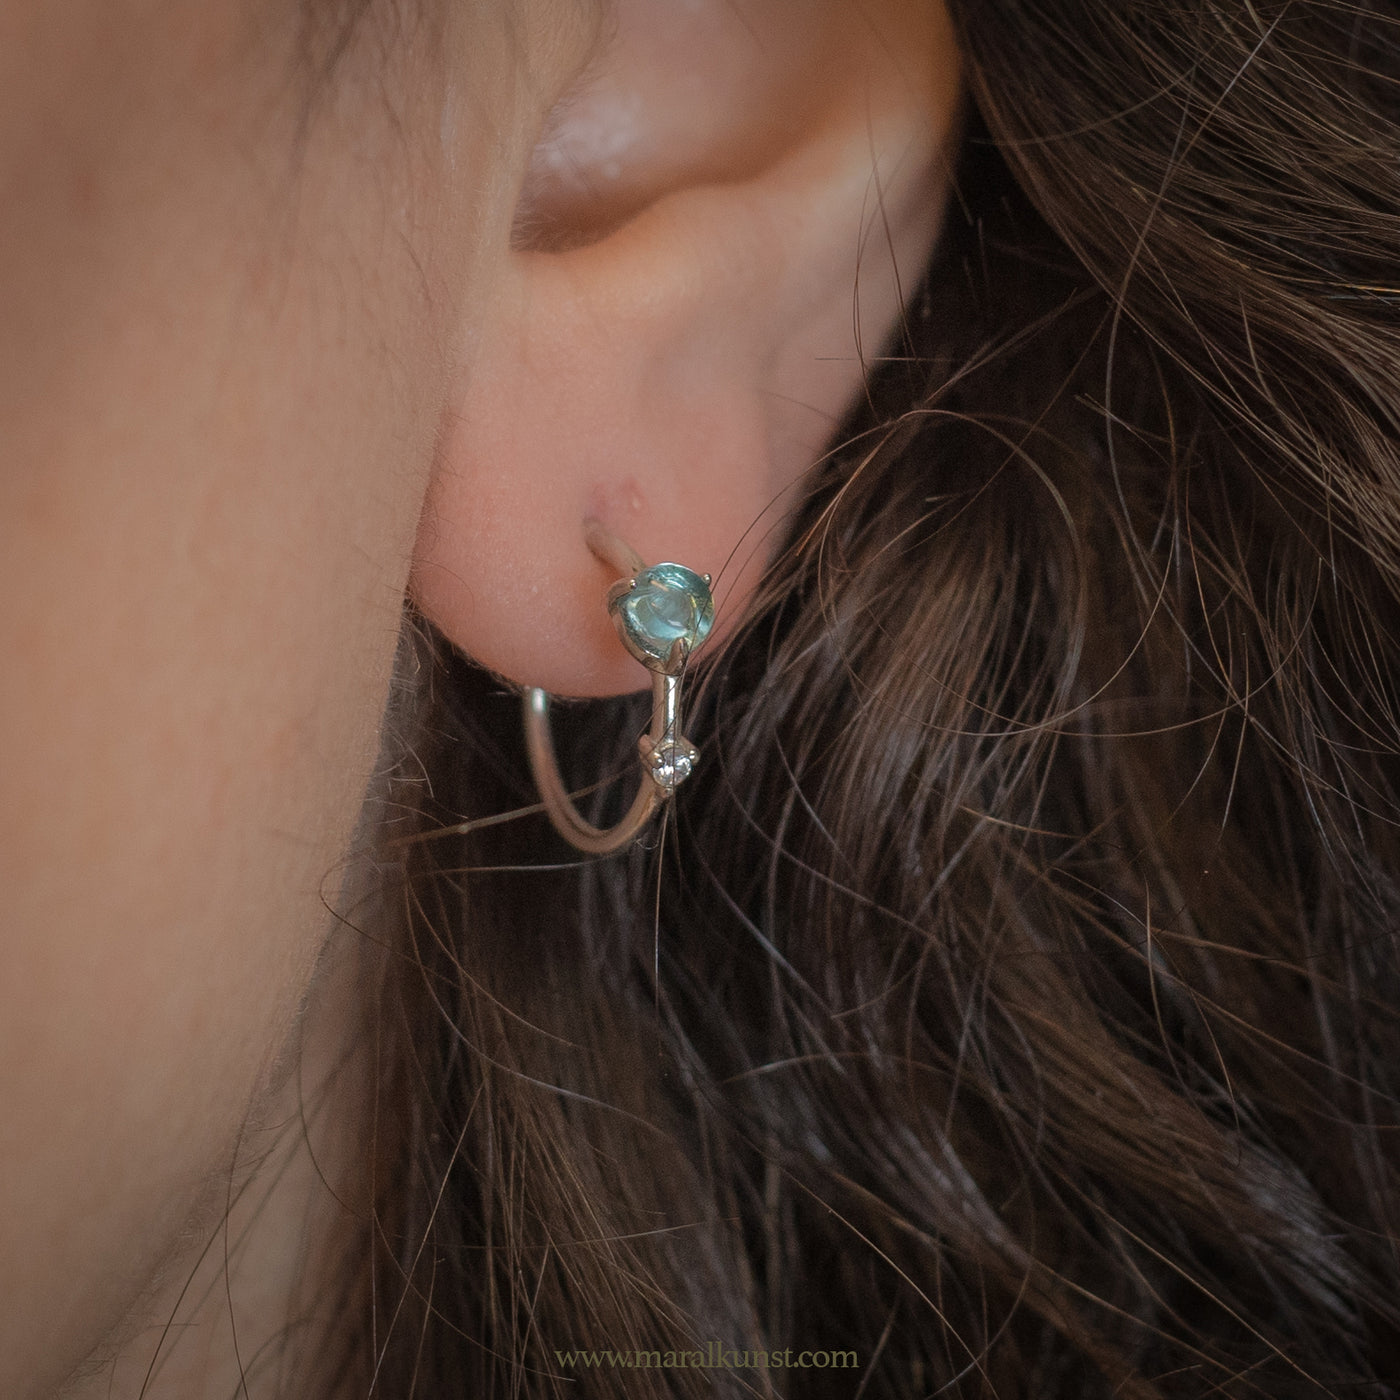 Tiny silver earrings